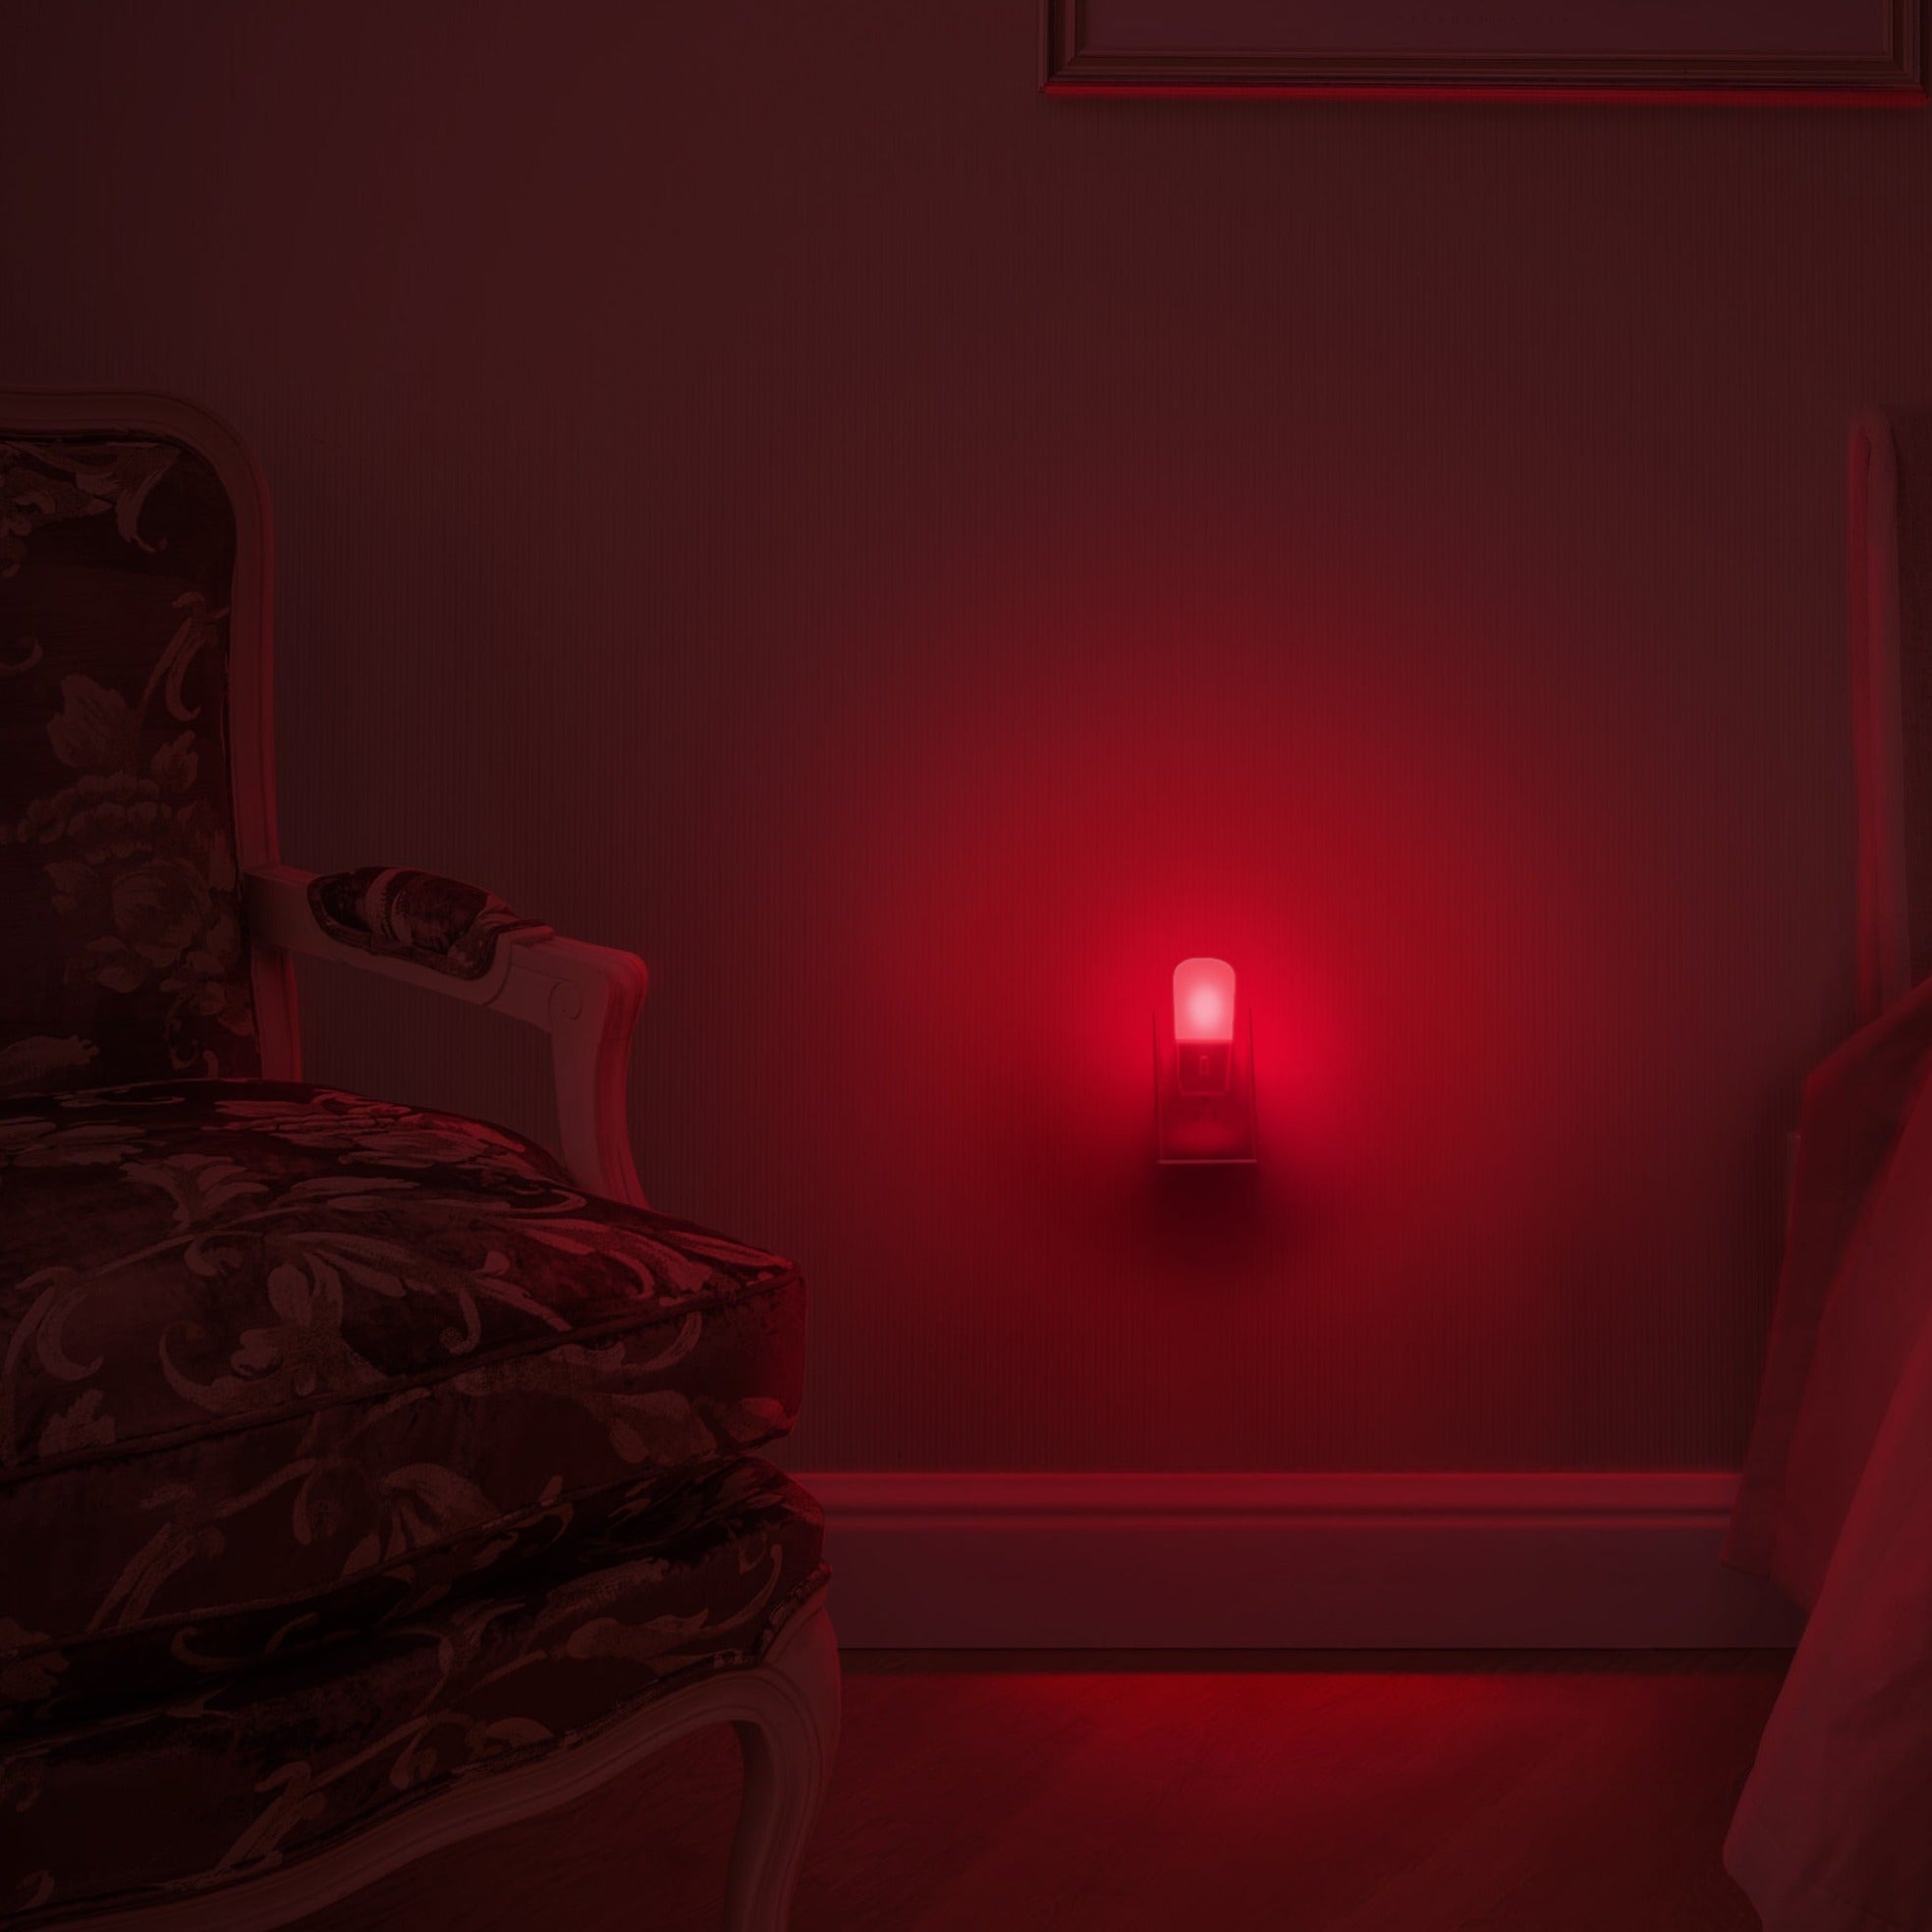 Red Plug in Kids Night light, Baby Night Light